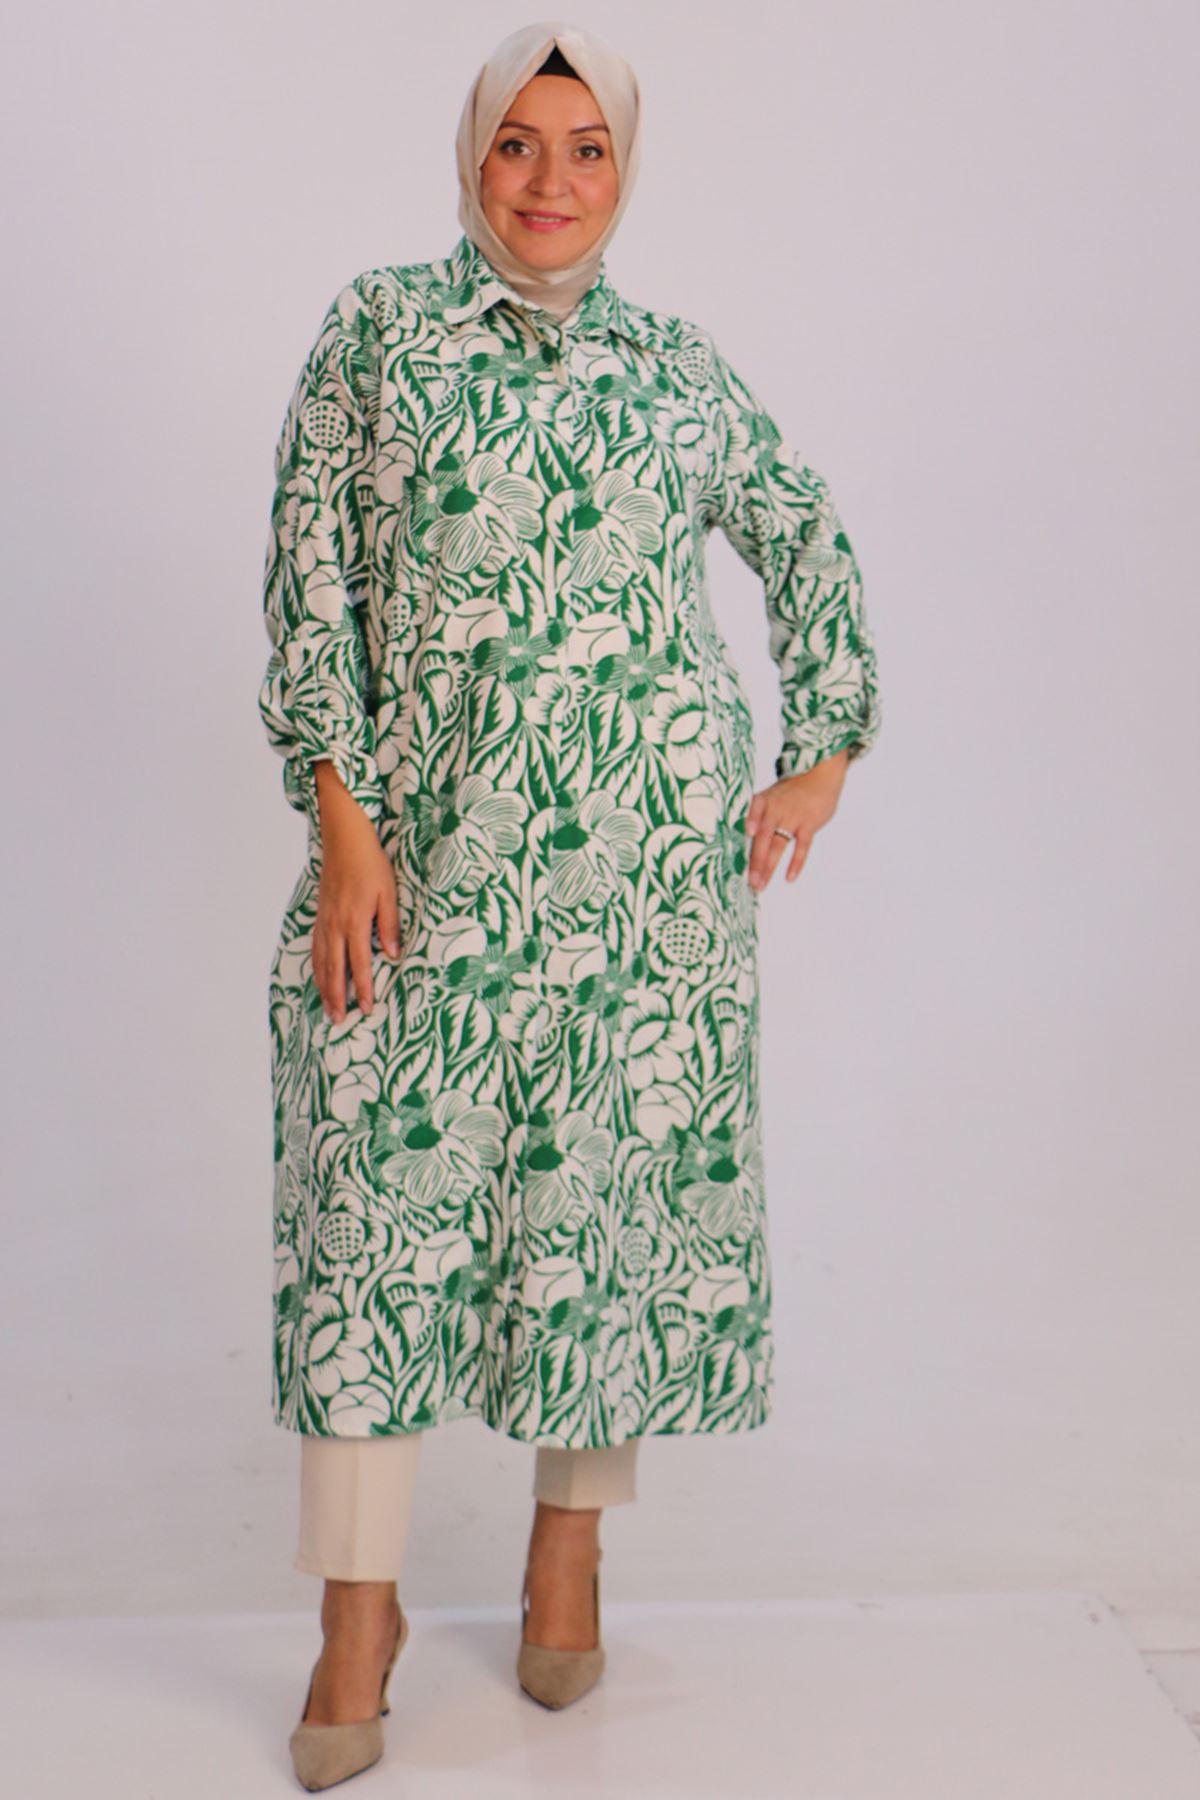 38120 Large Size Patterned Linen Shirt - Floral Pattern Green